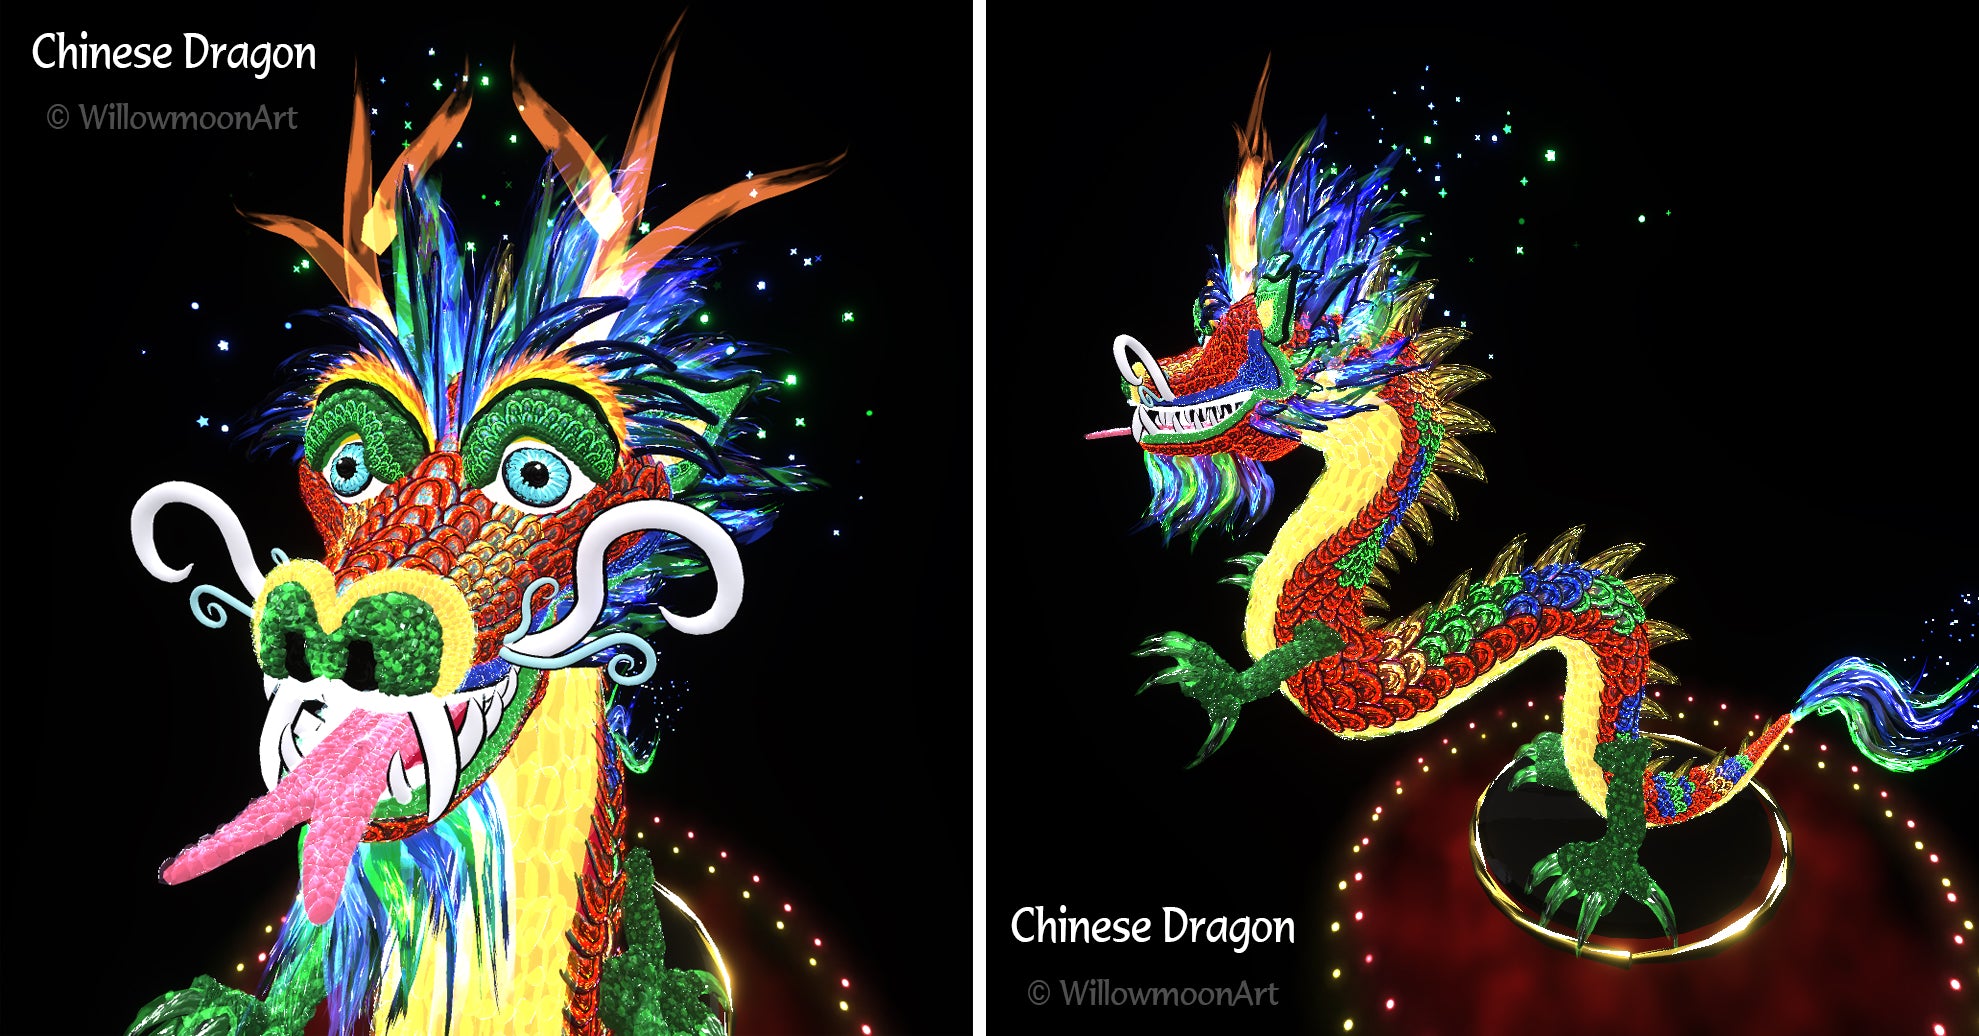 Chinese Dragon - Virtual Reality Art by Willowmoon Art